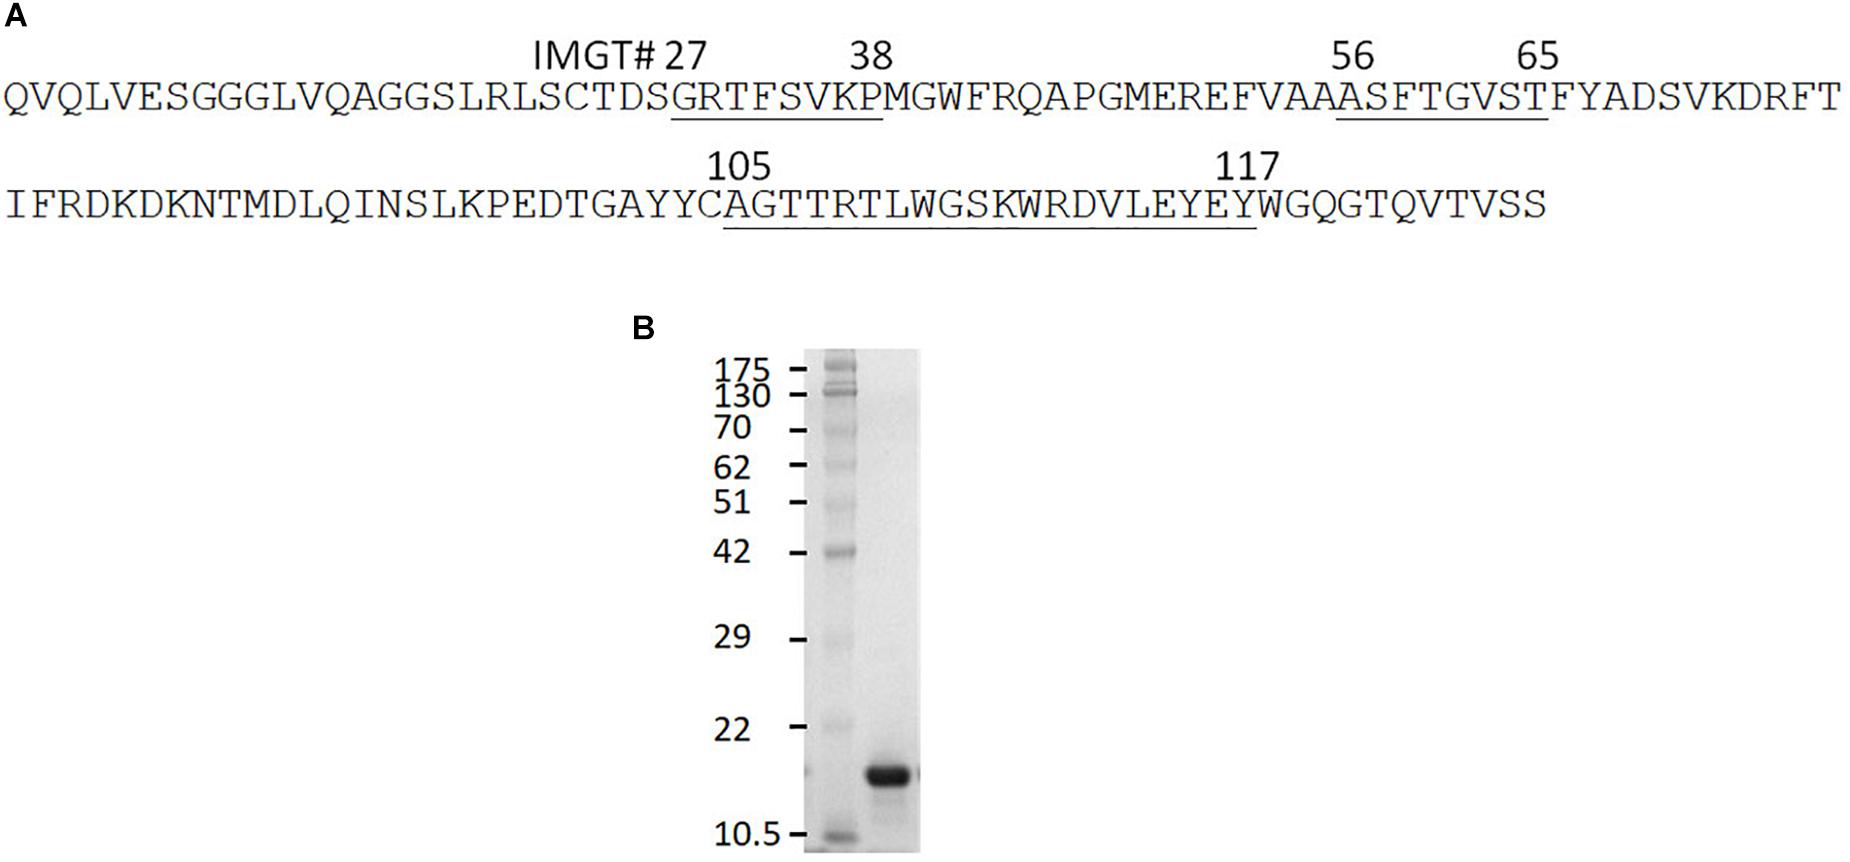 Anti-Flagellin FliC monoclonal IgG antibody